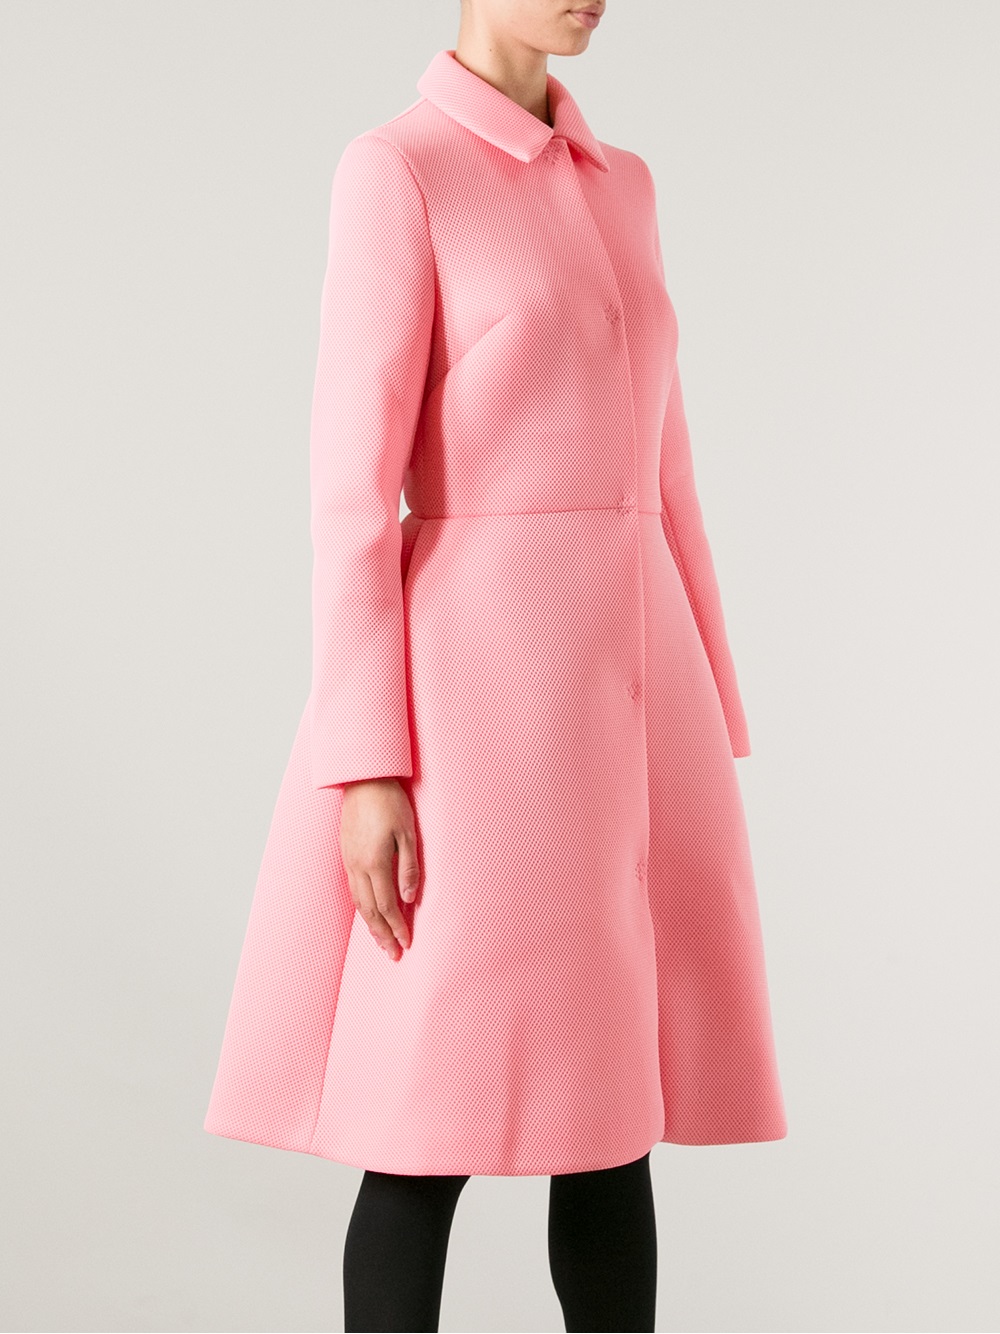 Simone rocha Simone Rocha Aline Coat in Pink | Lyst